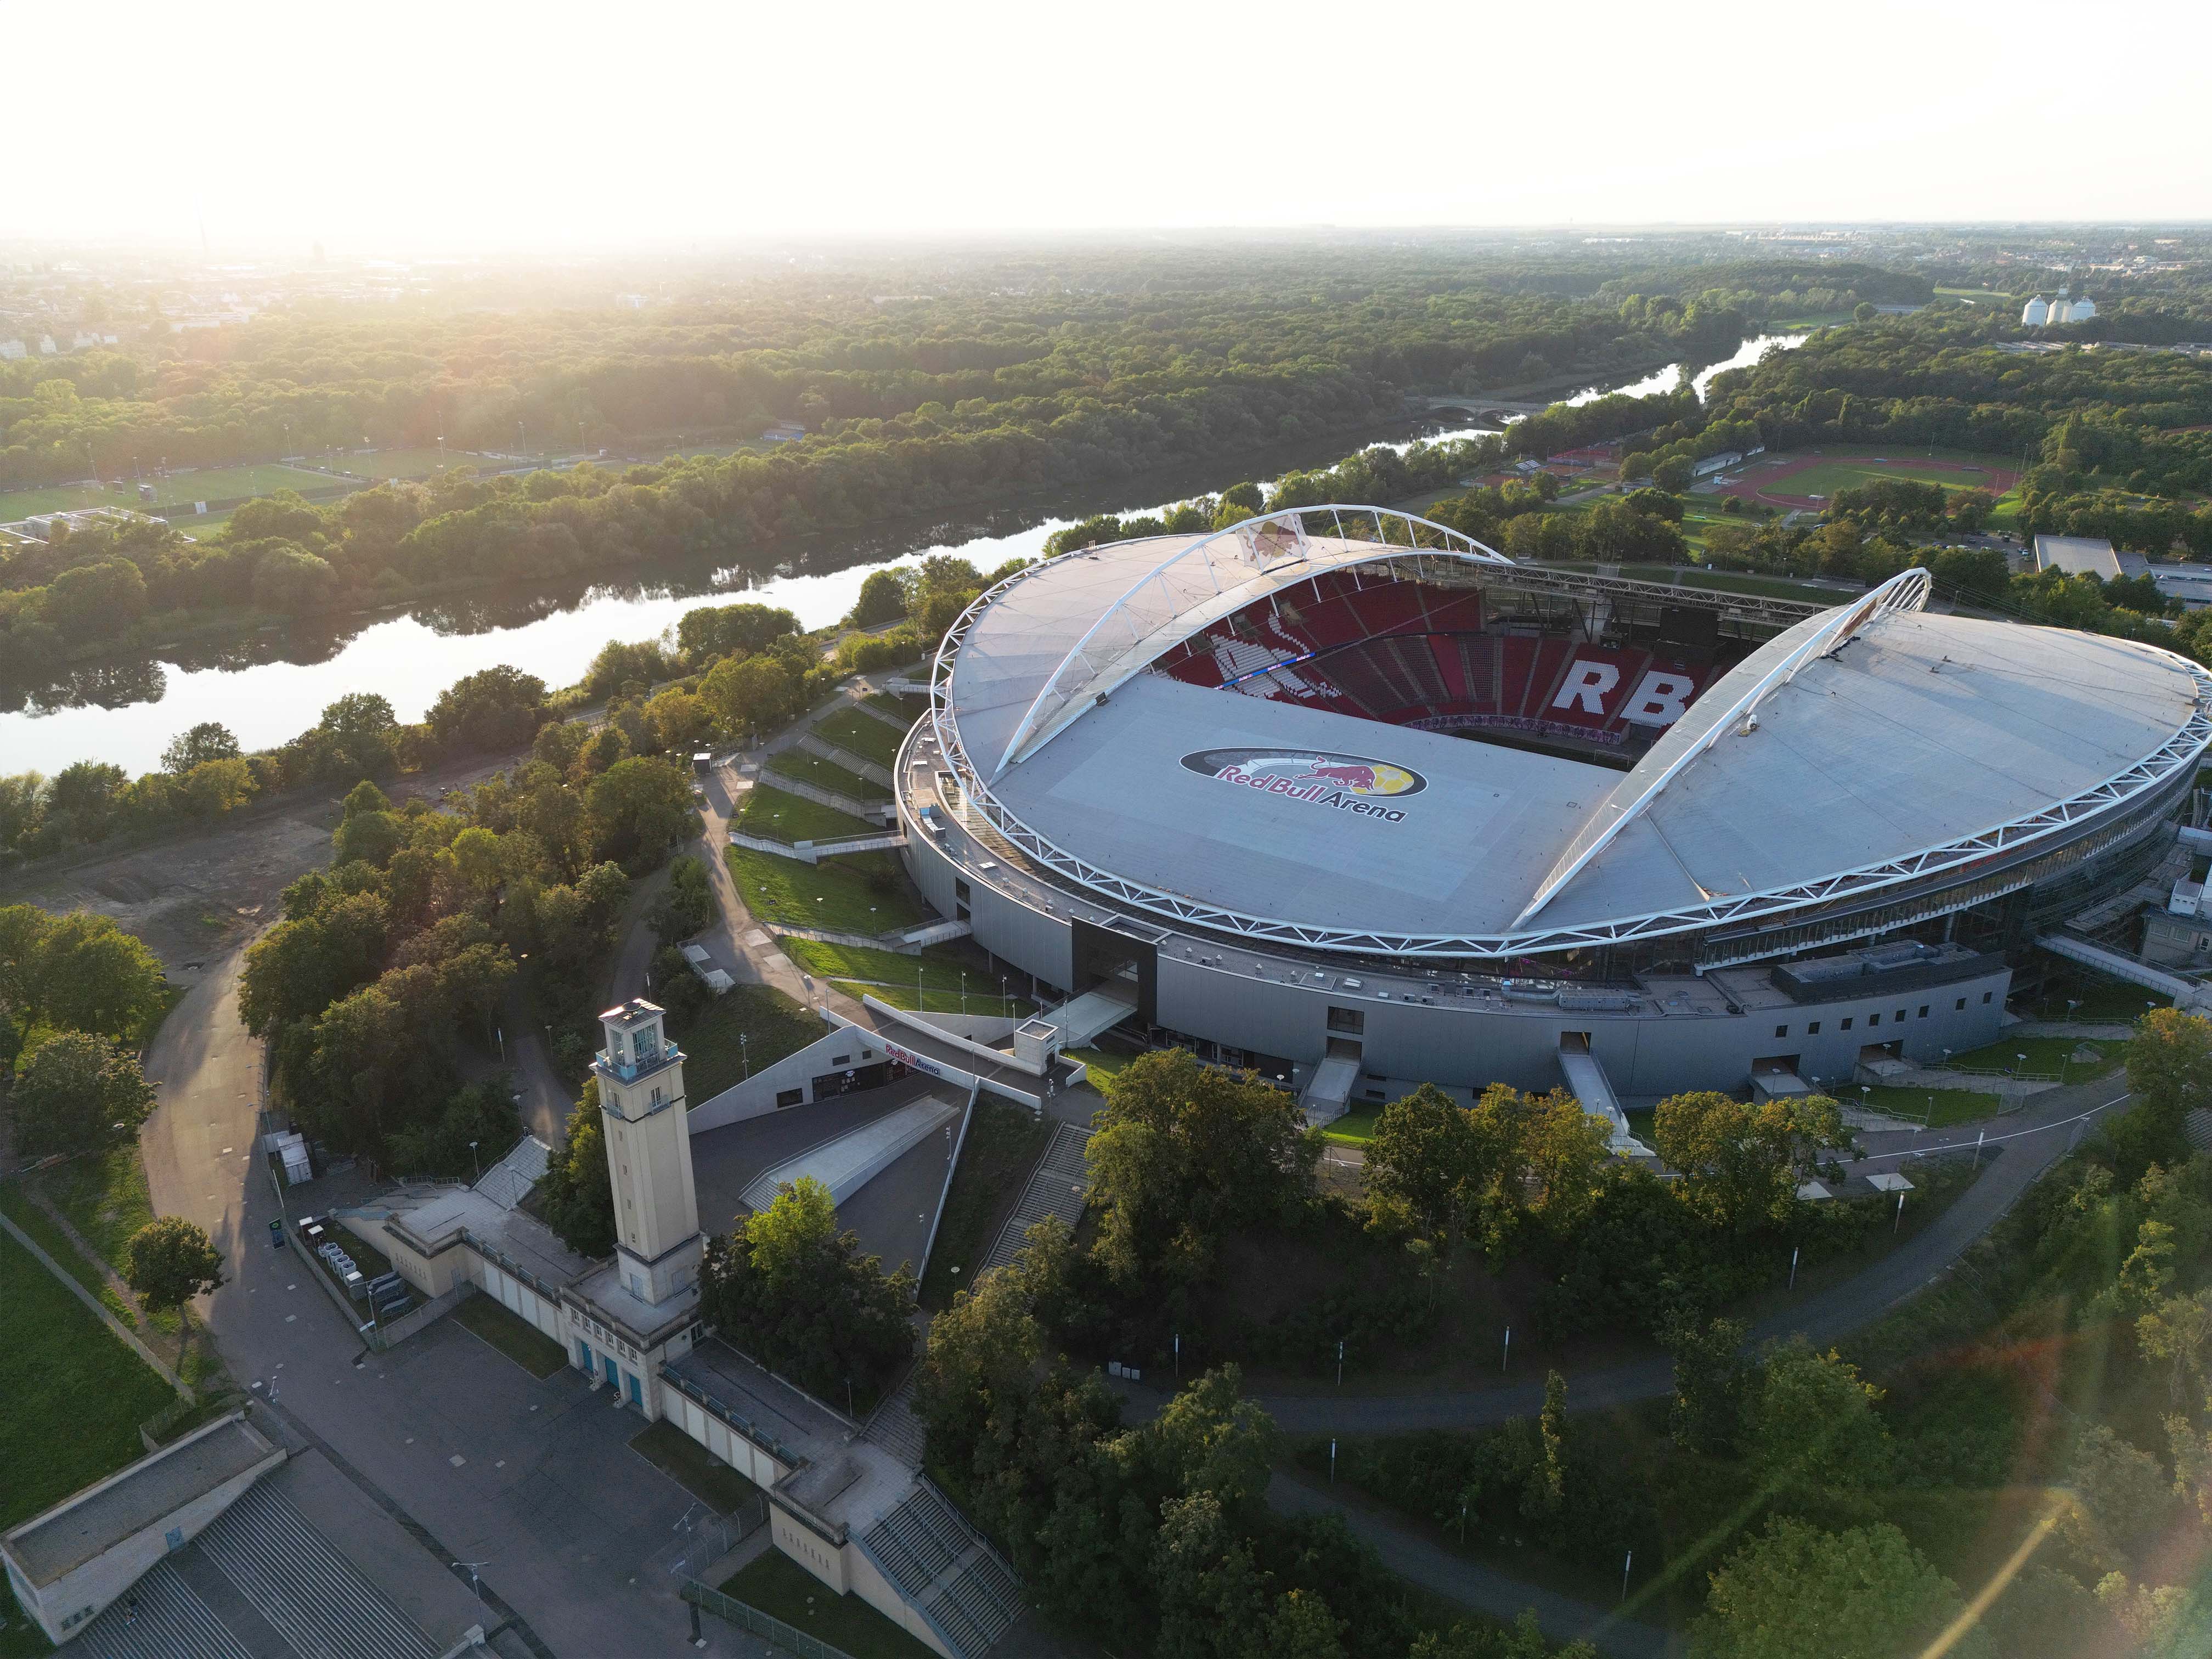 Leipzig Stadium